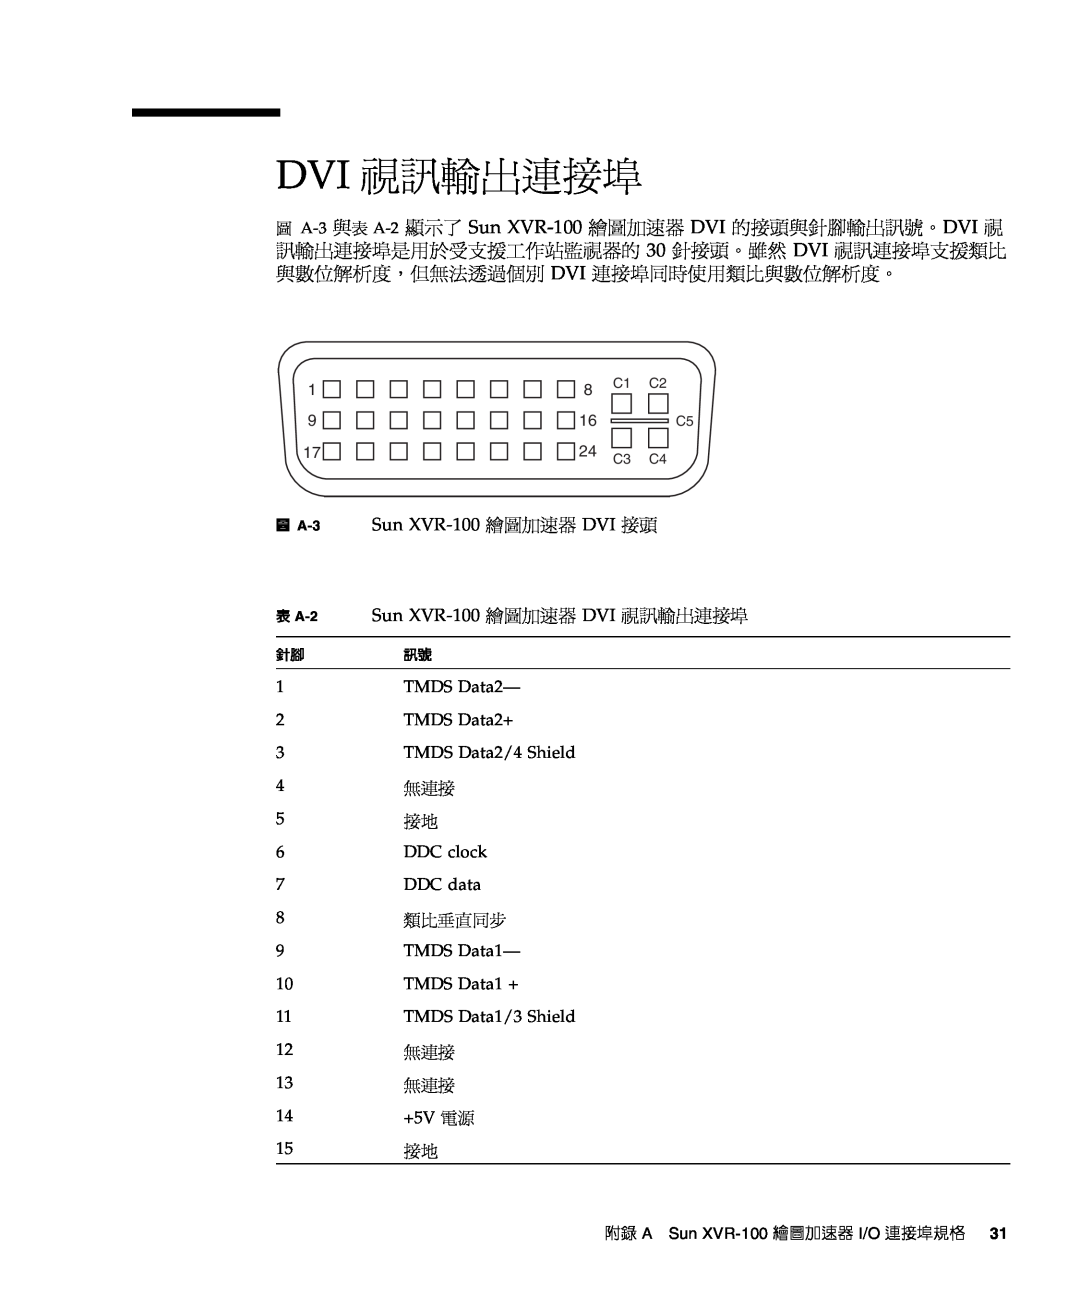 Sun Microsystems manual Dvi 視訊輸出連接埠, 圖 A-3 Sun XVR-100 繪圖加速器 DVI 接頭 表 A-2 Sun XVR-100 繪圖加速器 DVI 視訊輸出連接埠, 針腳訊號 